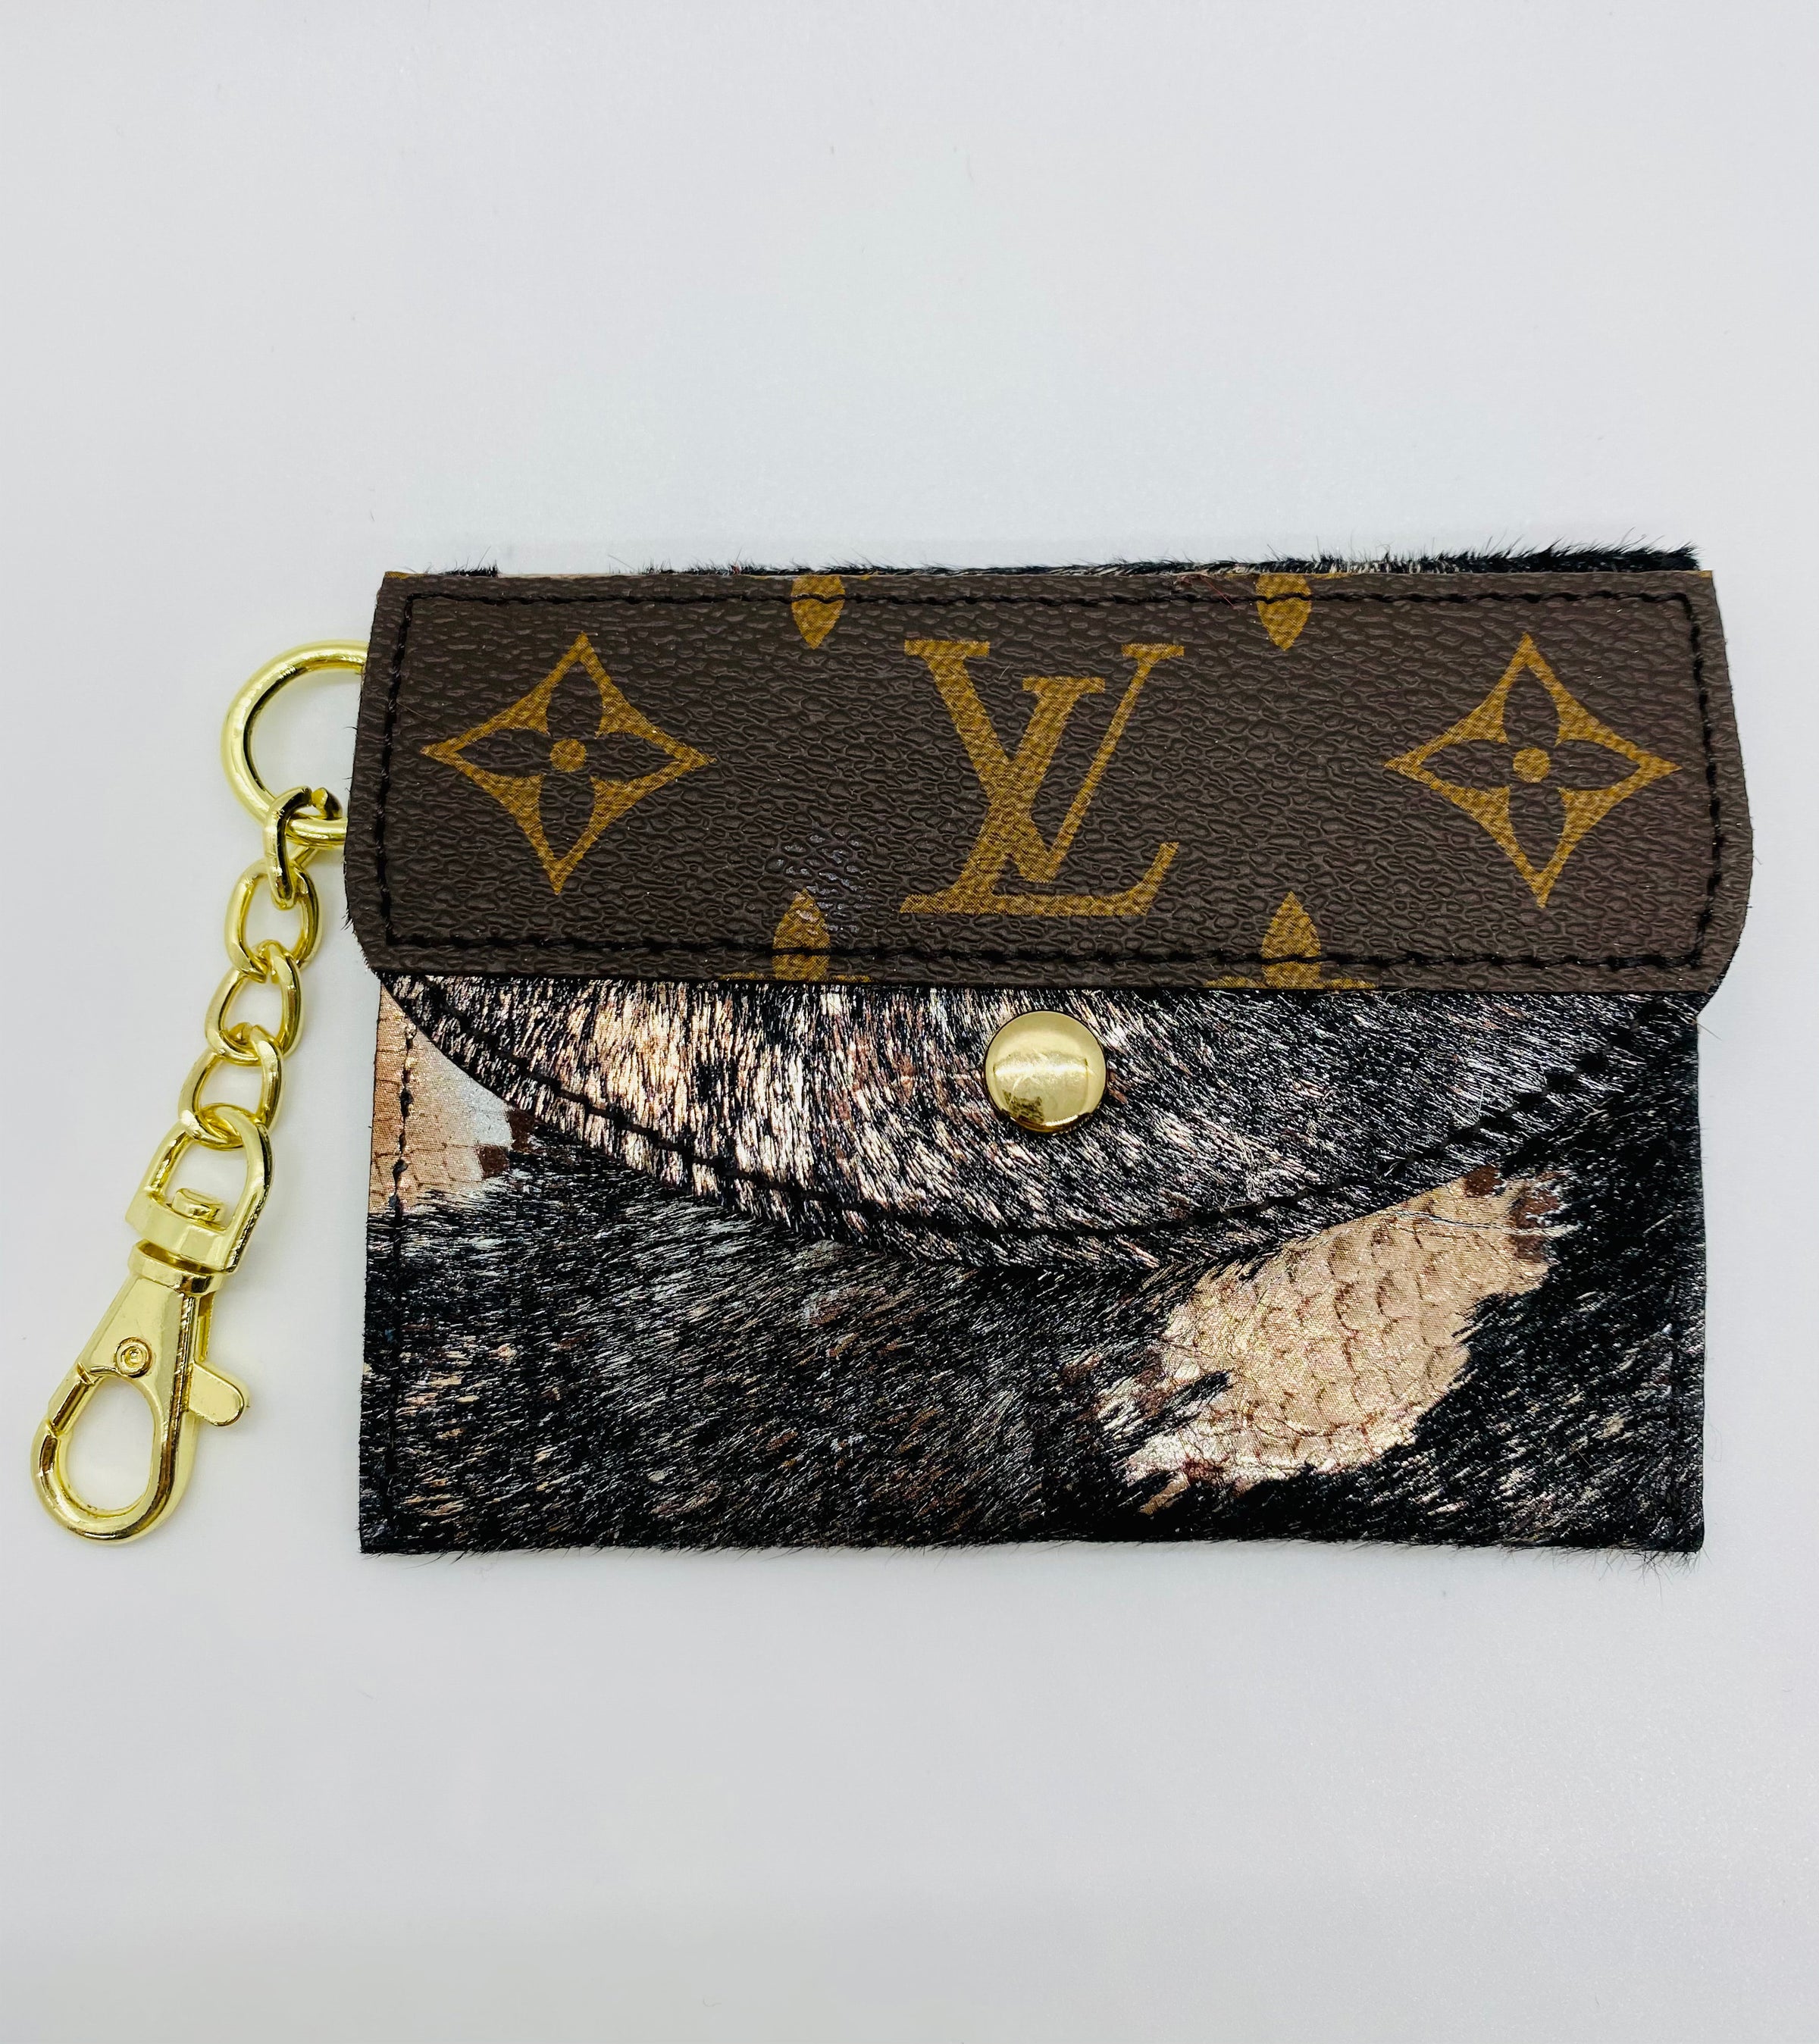 Louis Vuitton upcycled vintage repurposed vintage cowhide leather